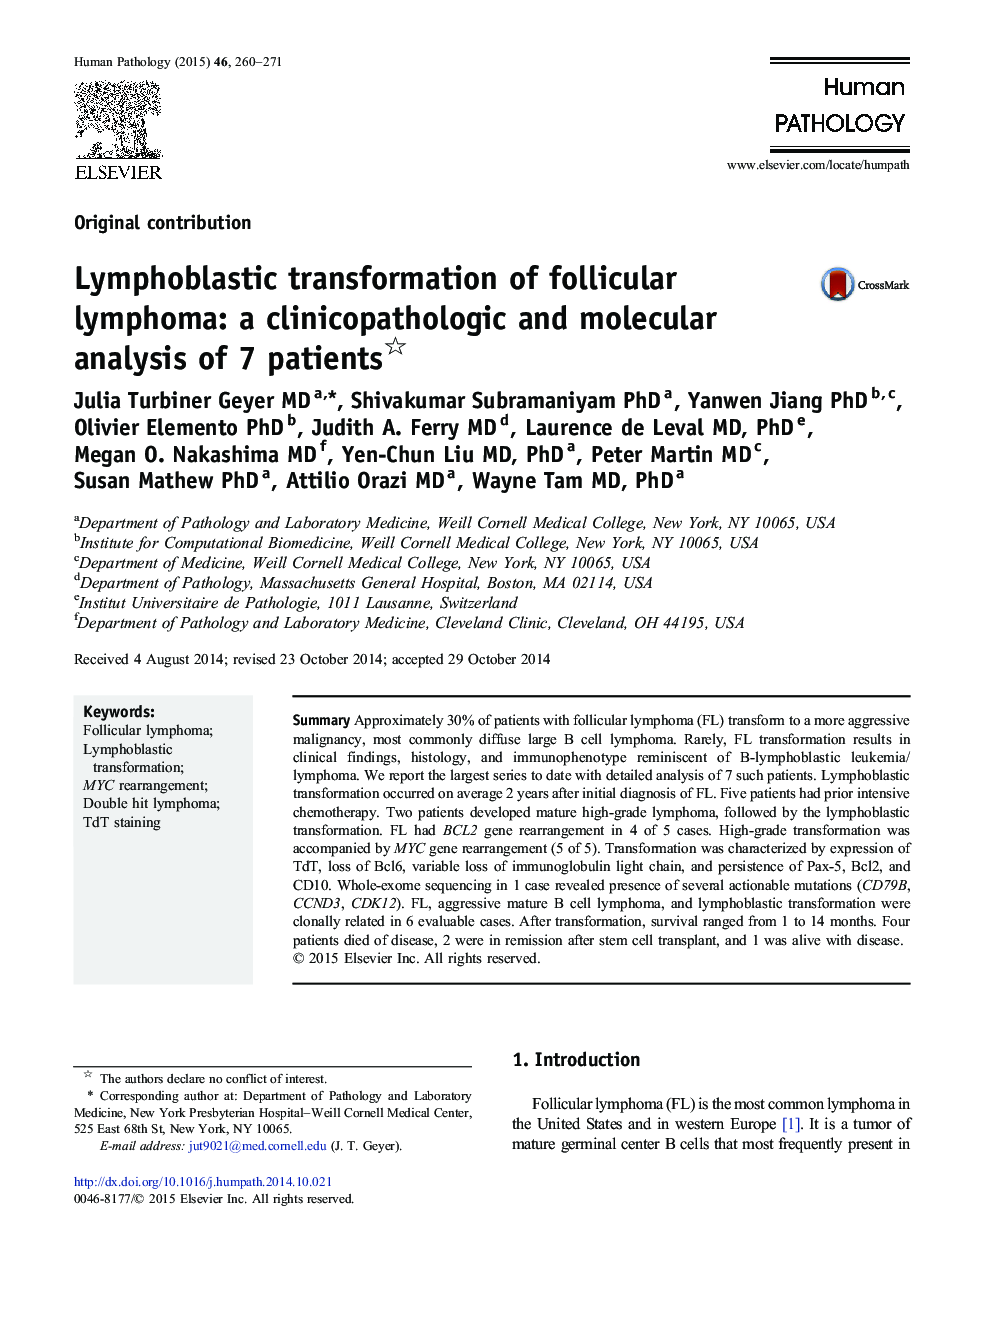 Lymphoblastic transformation of follicular lymphoma: a clinicopathologic and molecular analysis of 7 patients 